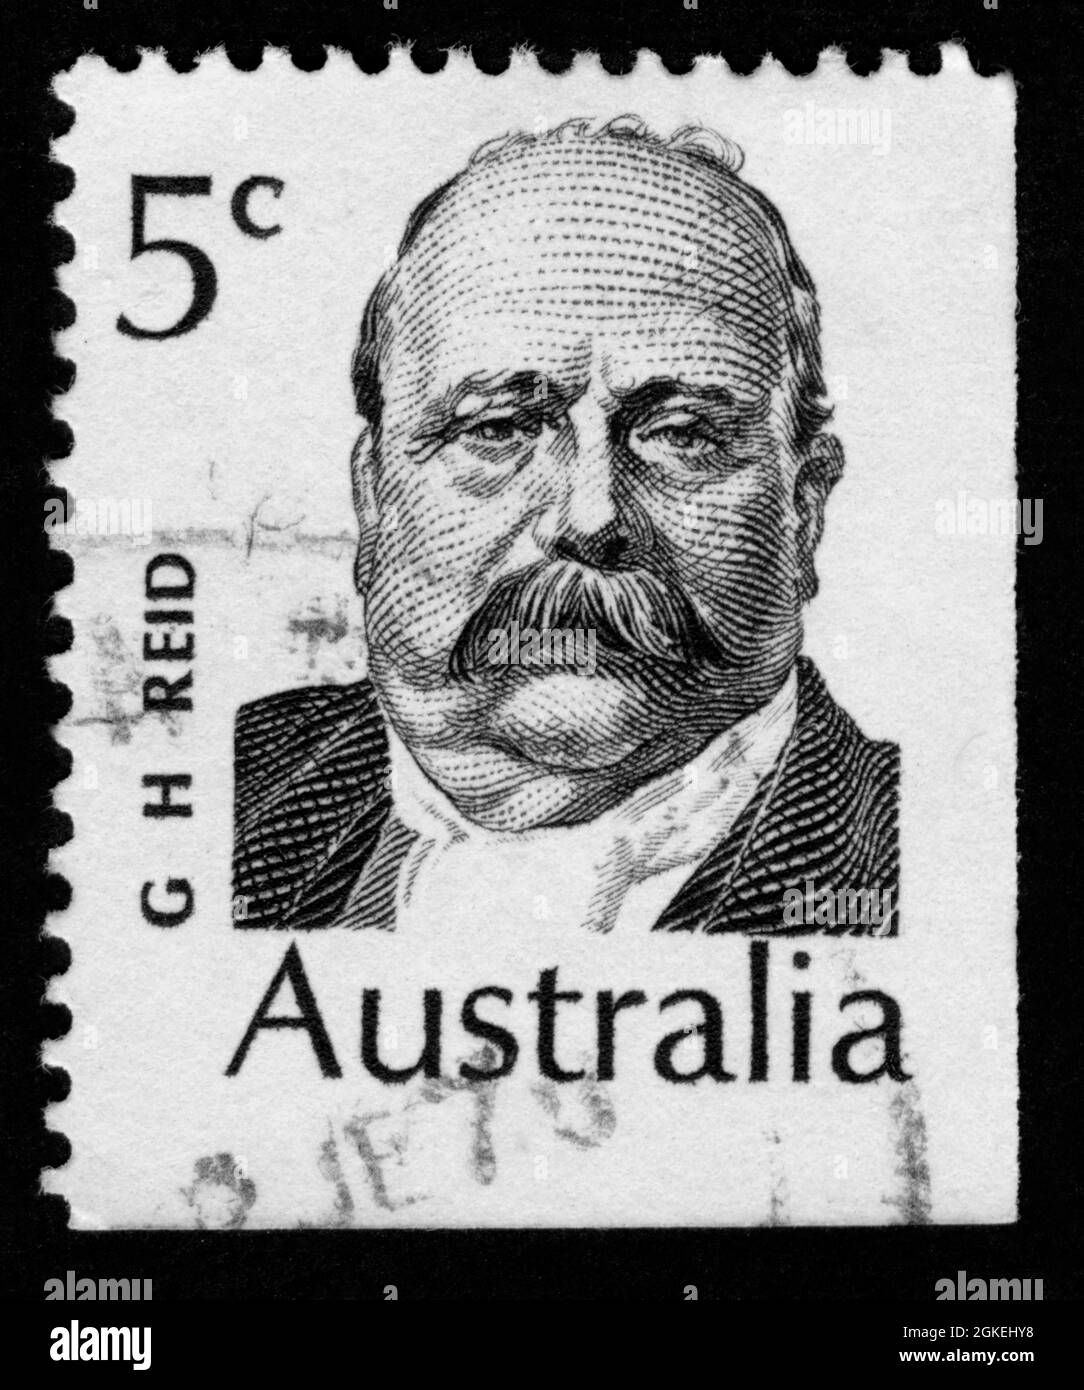 Stamp print in Auatralia, G H Reid Stock Photo